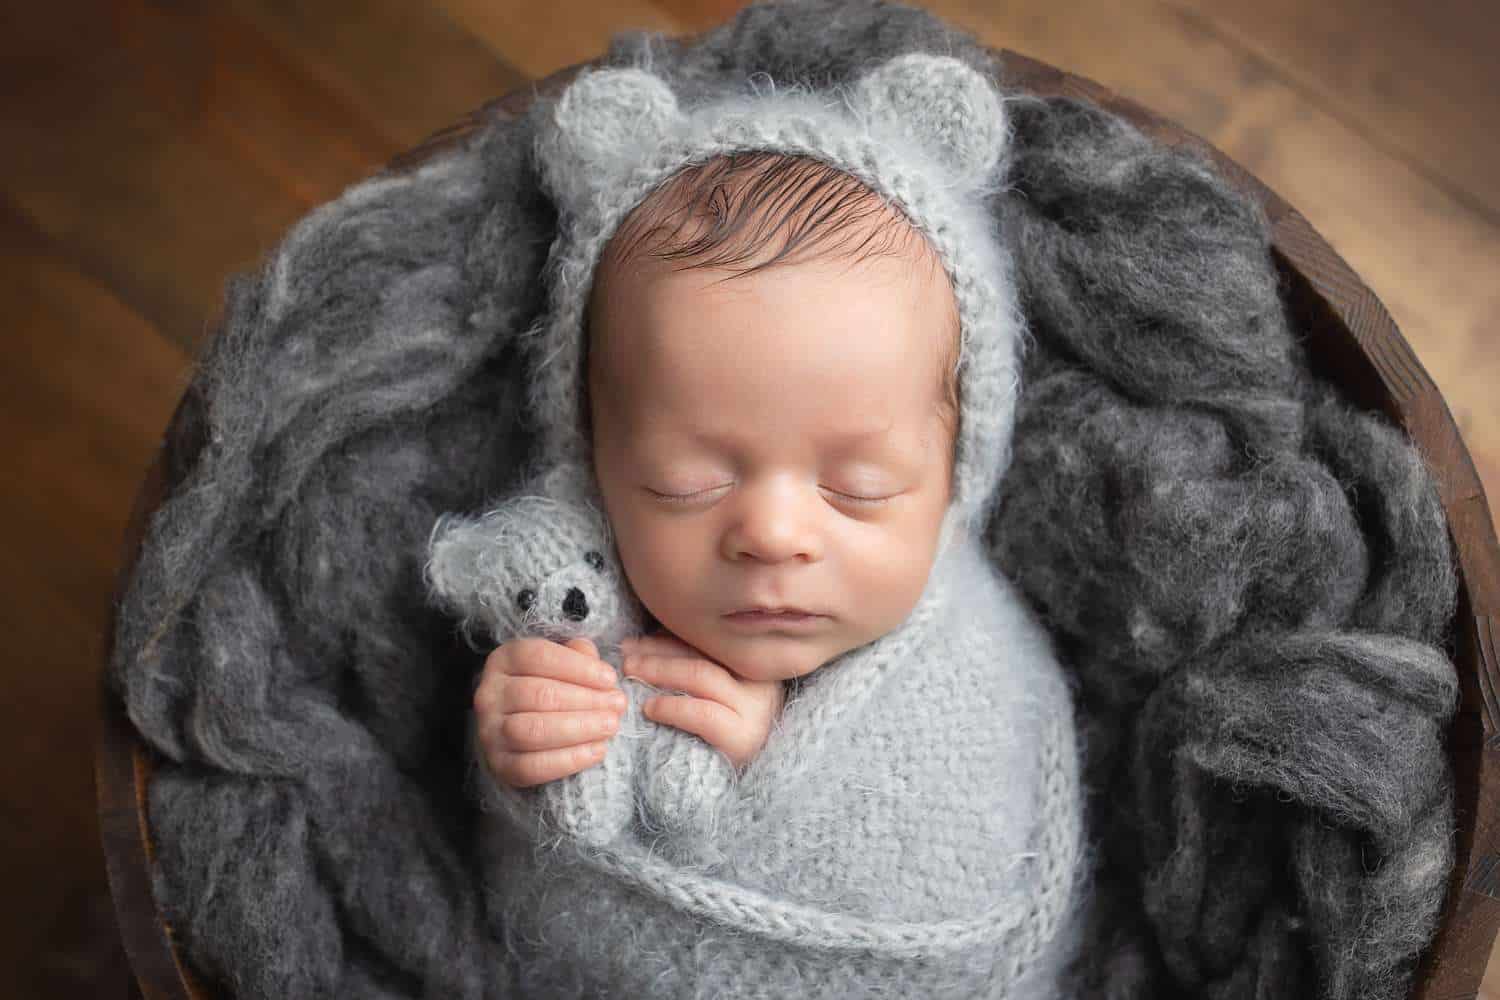 newborn photographer in rochester ny captures newborn baby boy asleep in a bucket wearing a teddy bear bonnet